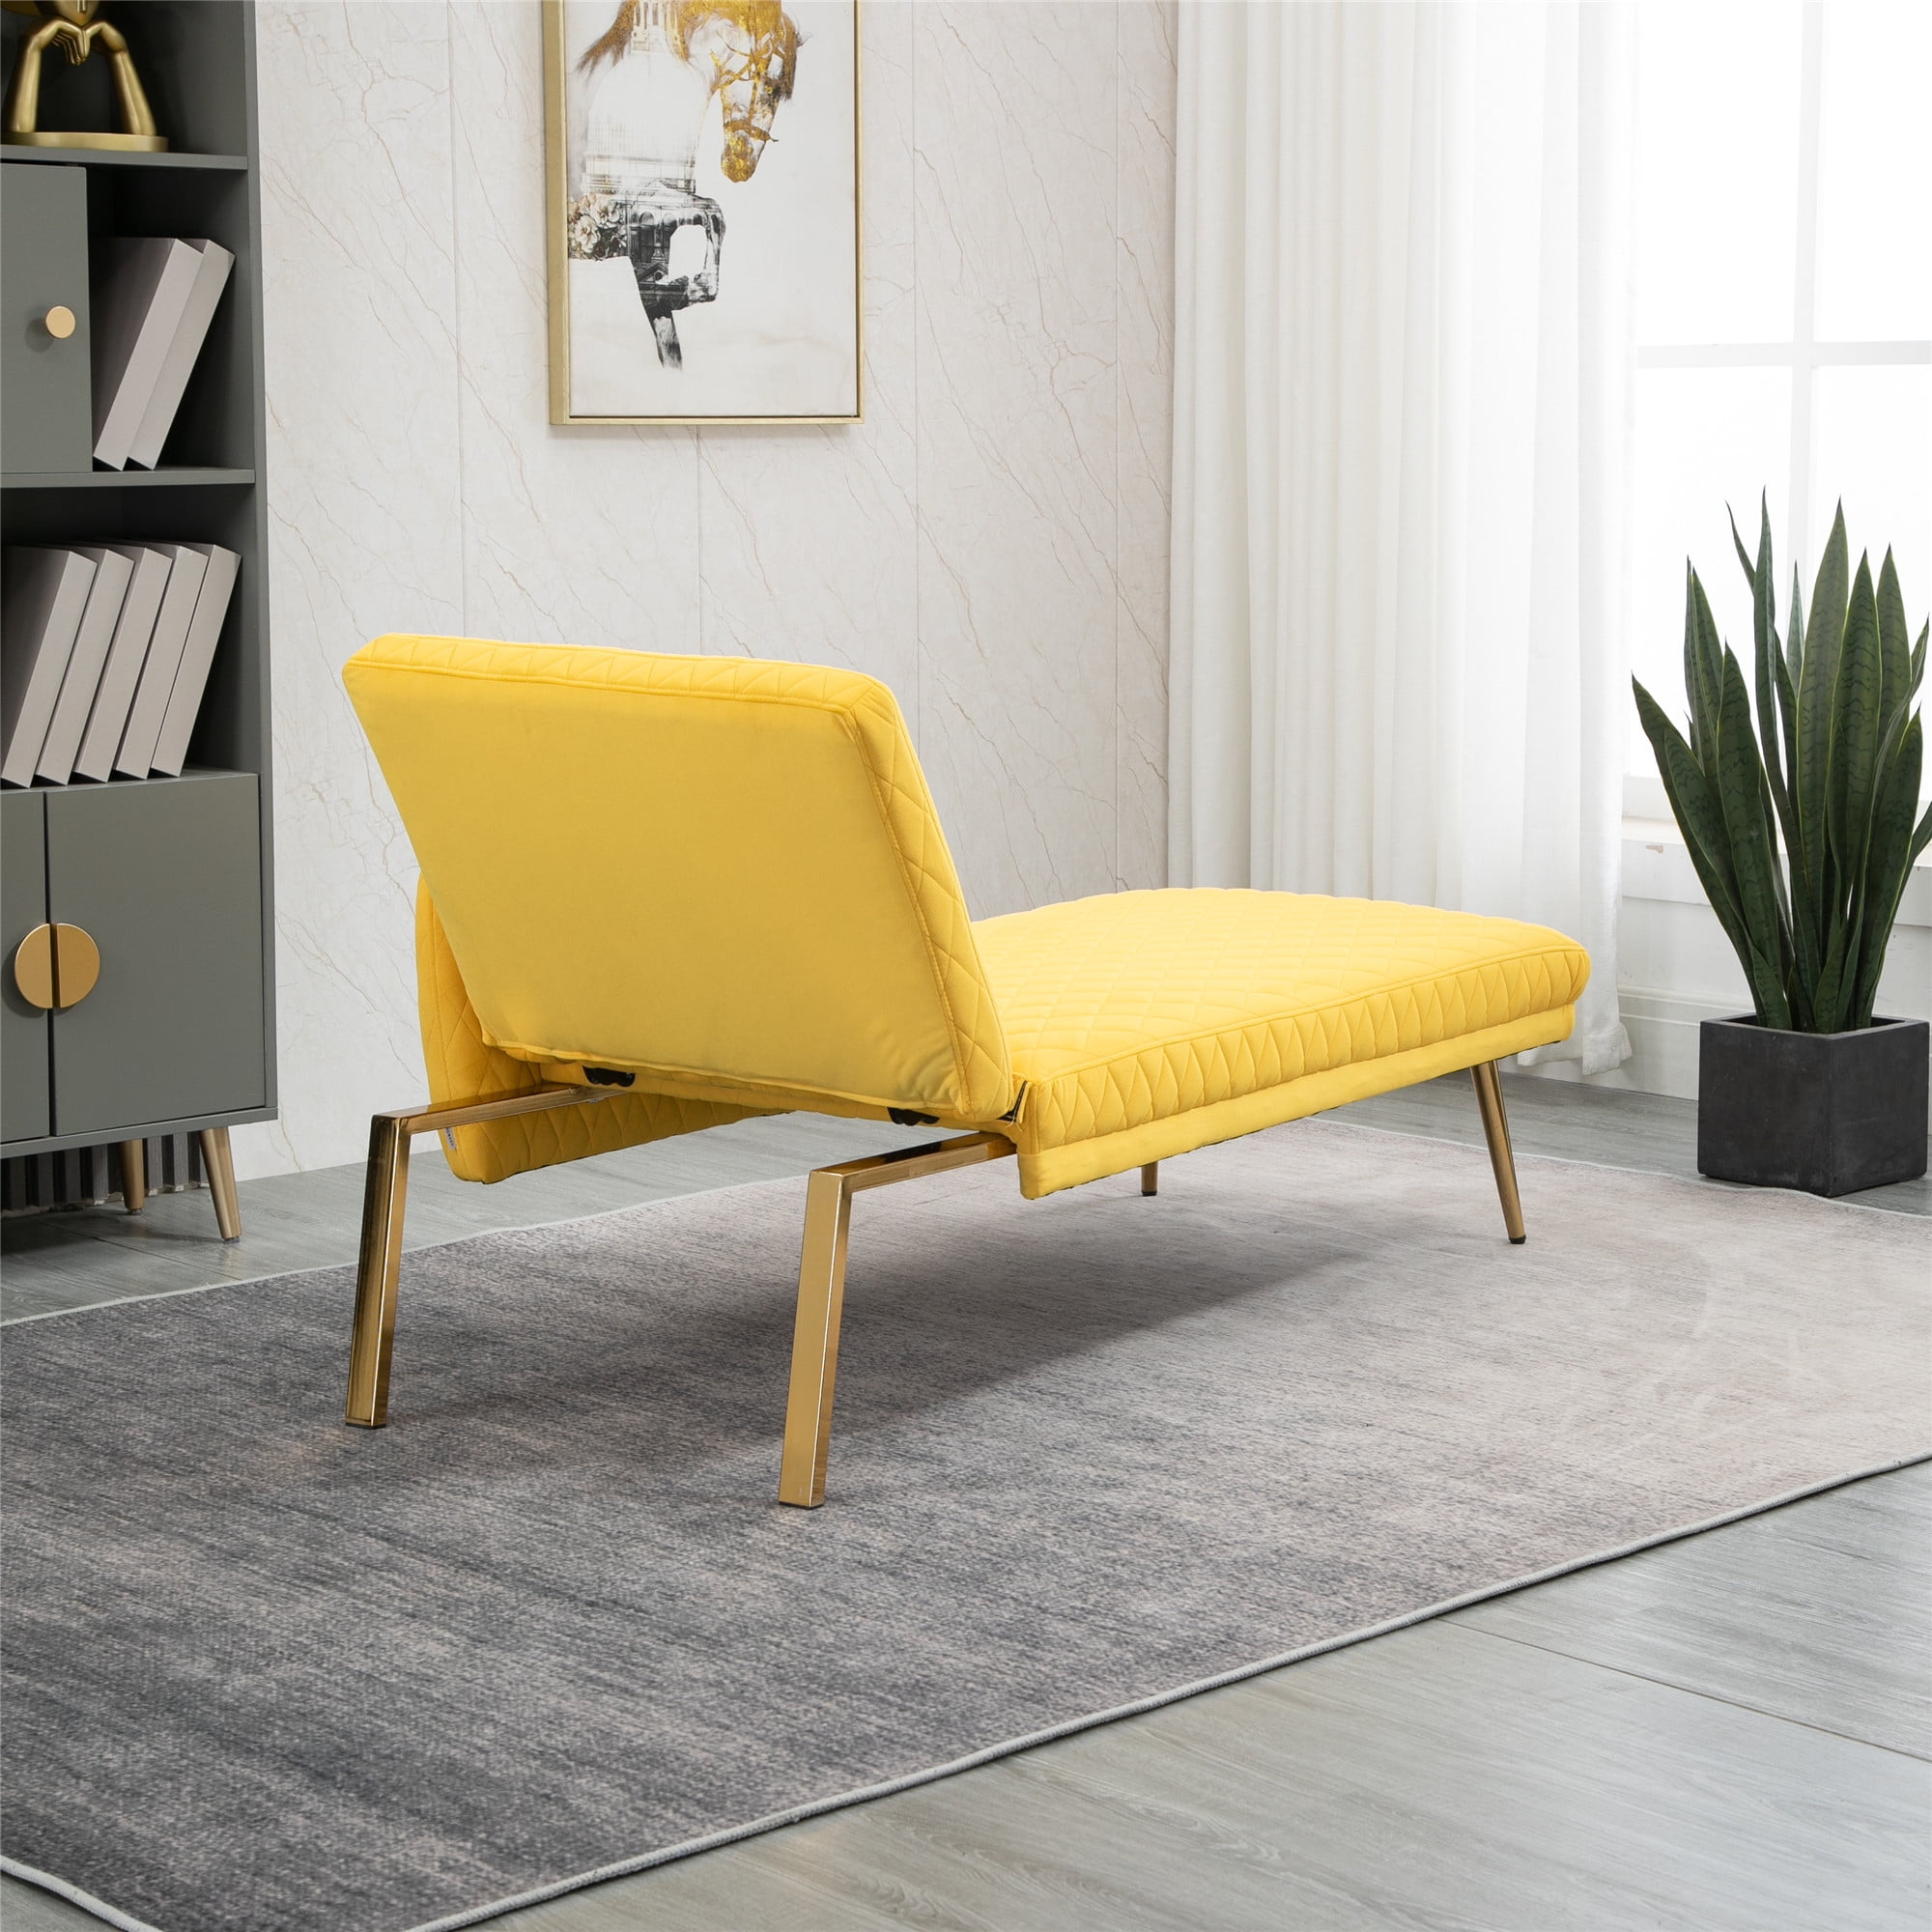 Velvet Chaise Lounge Sleeper Sofa, Modern Tufted Upholstered Sofa Lounge Chair, Accent Loveseat Sofa Gold Metal Legs, for Living Room Bedroom Office, Green - Walmart.com